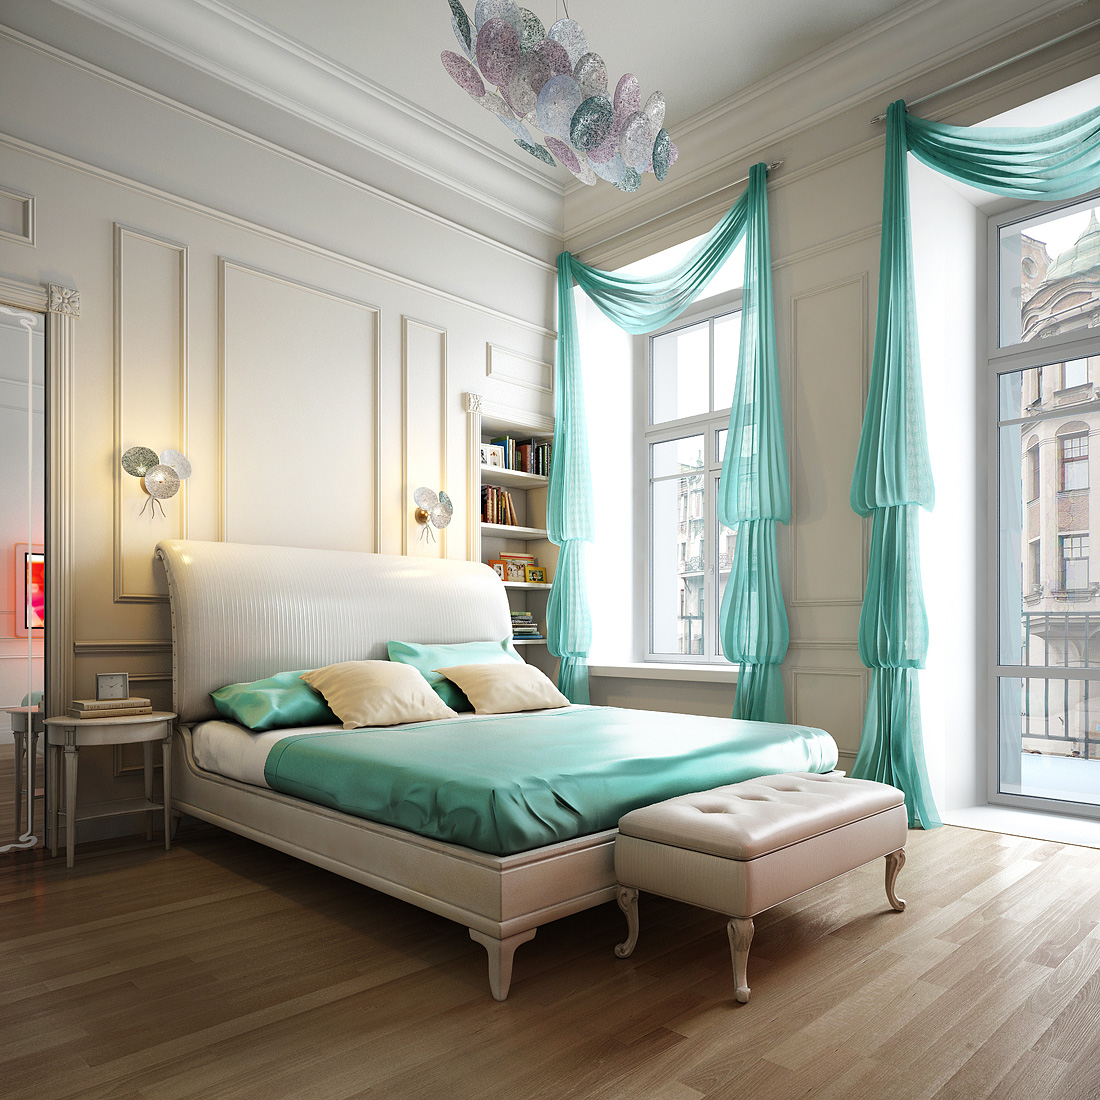 bed as centerpiece in bedroom interior design